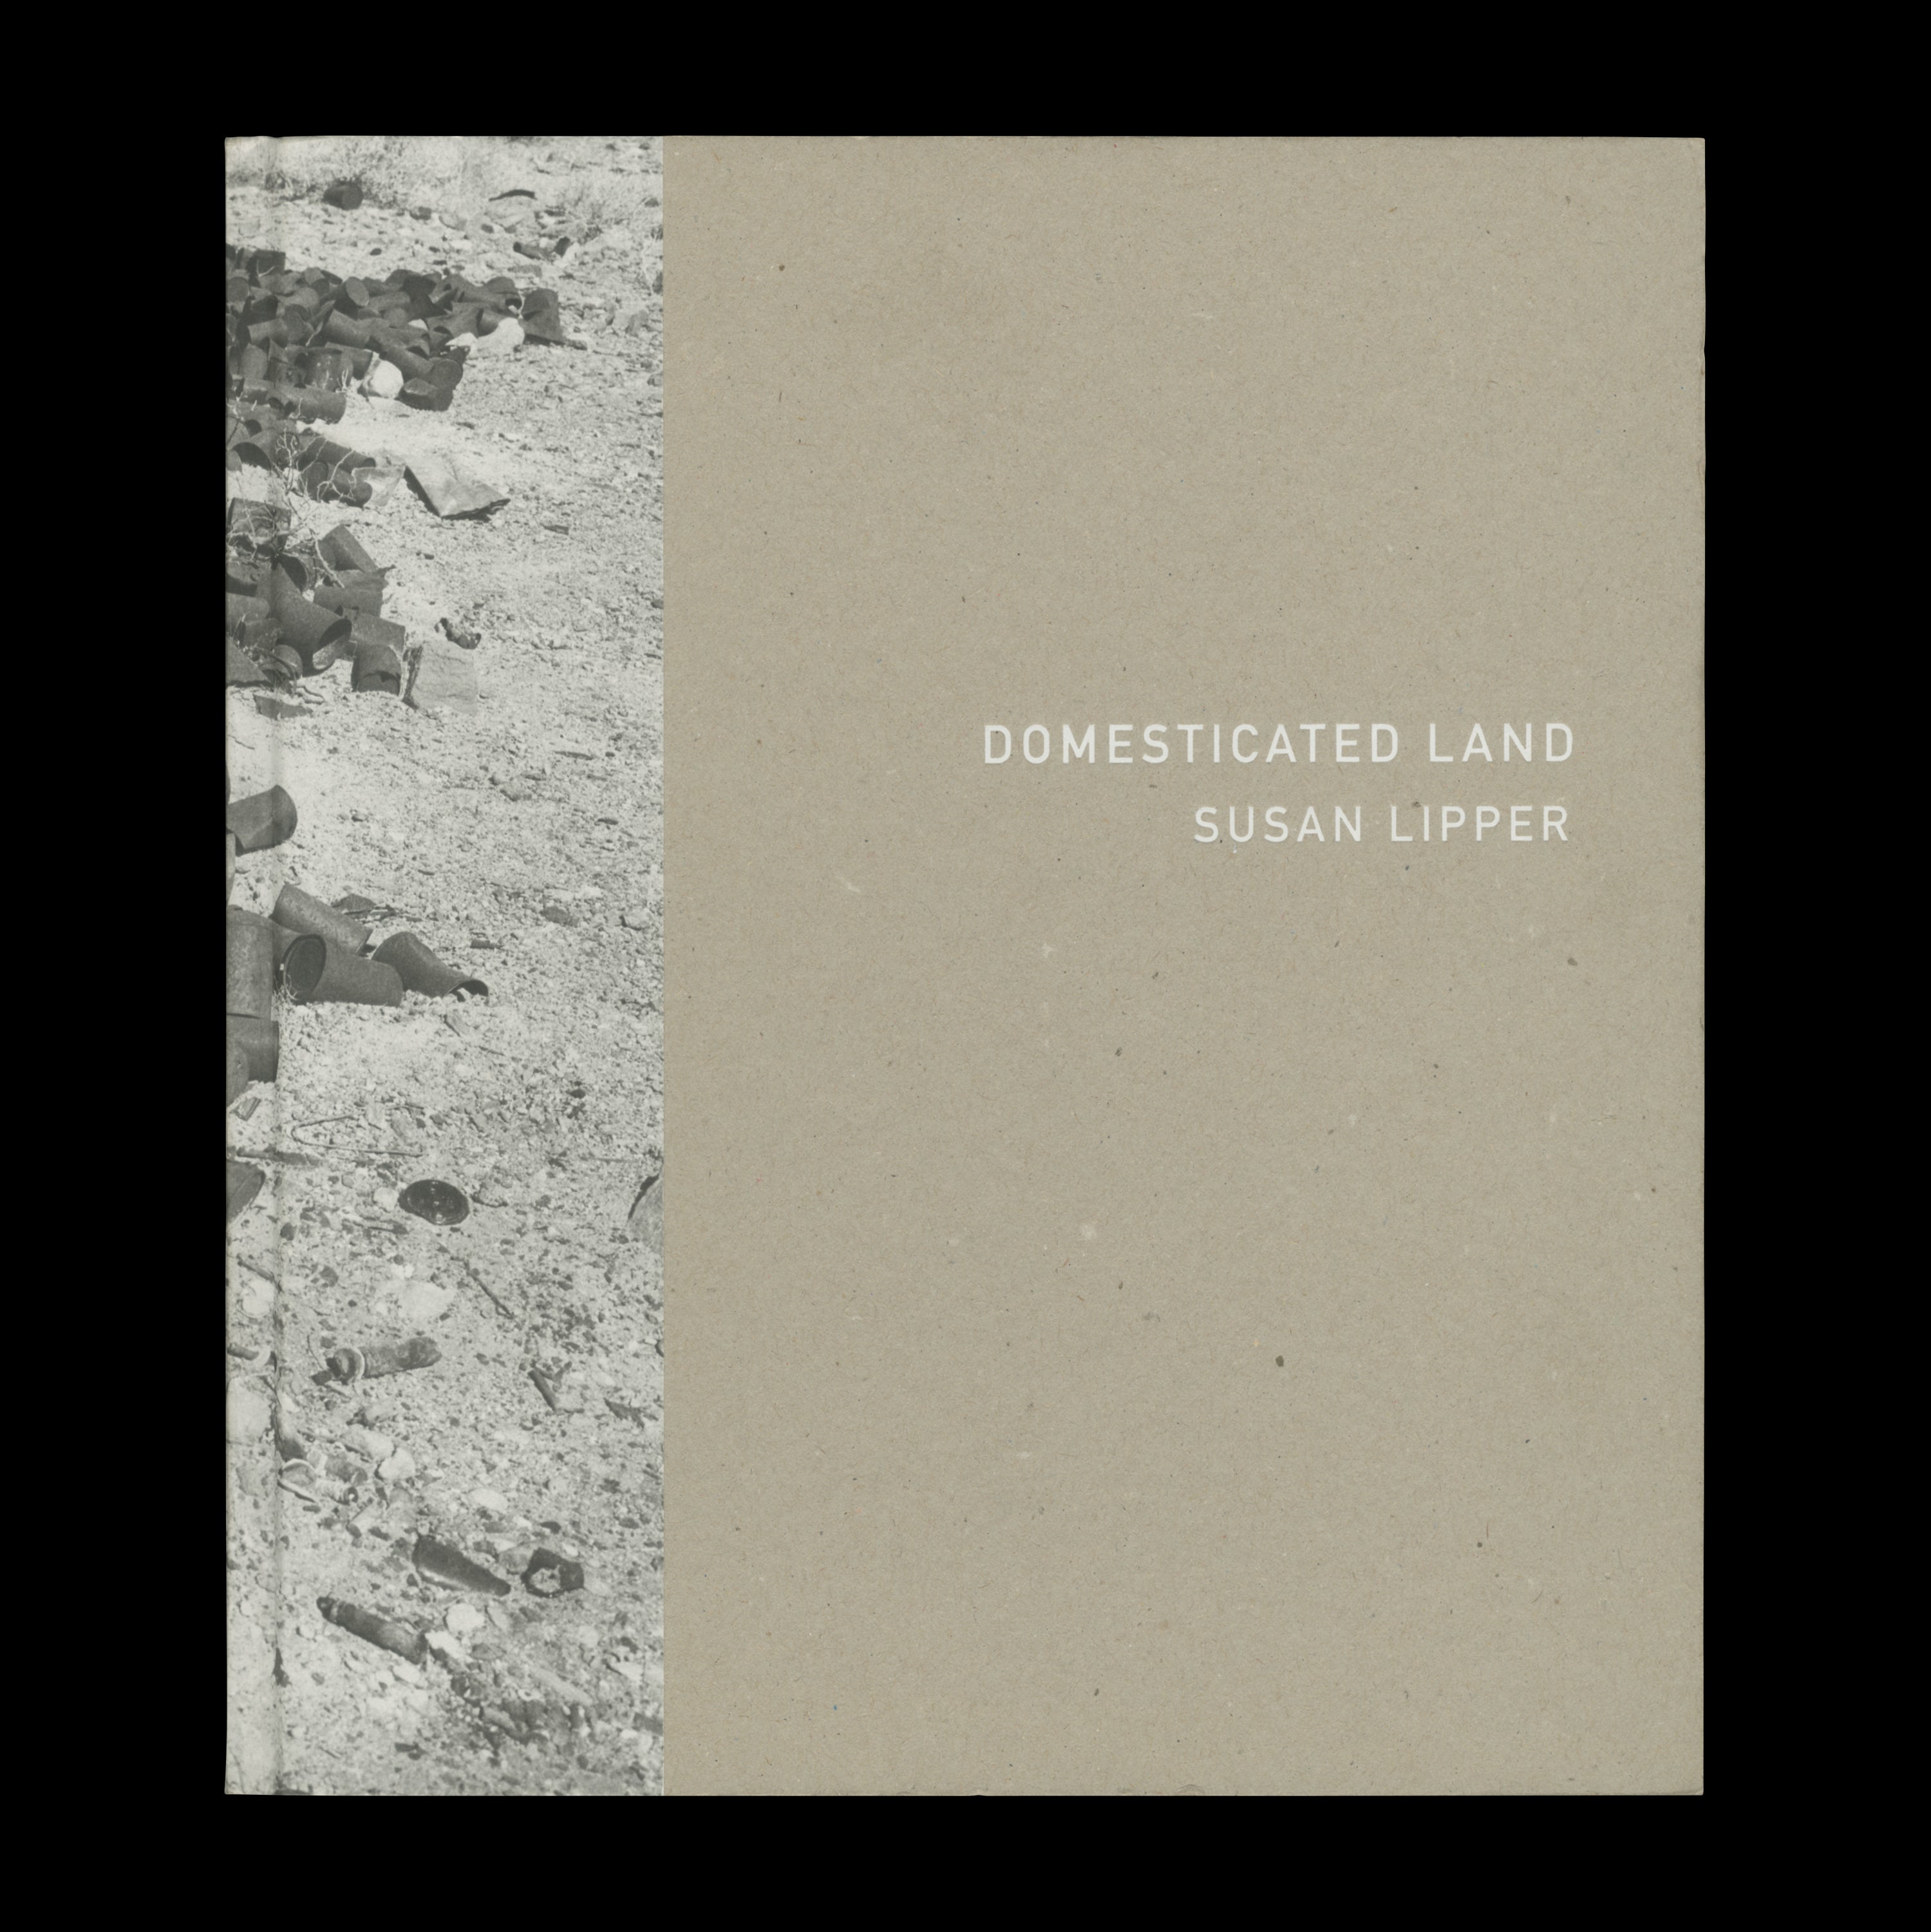 DOMESTICATED LAND by Susan Lipper, MACK